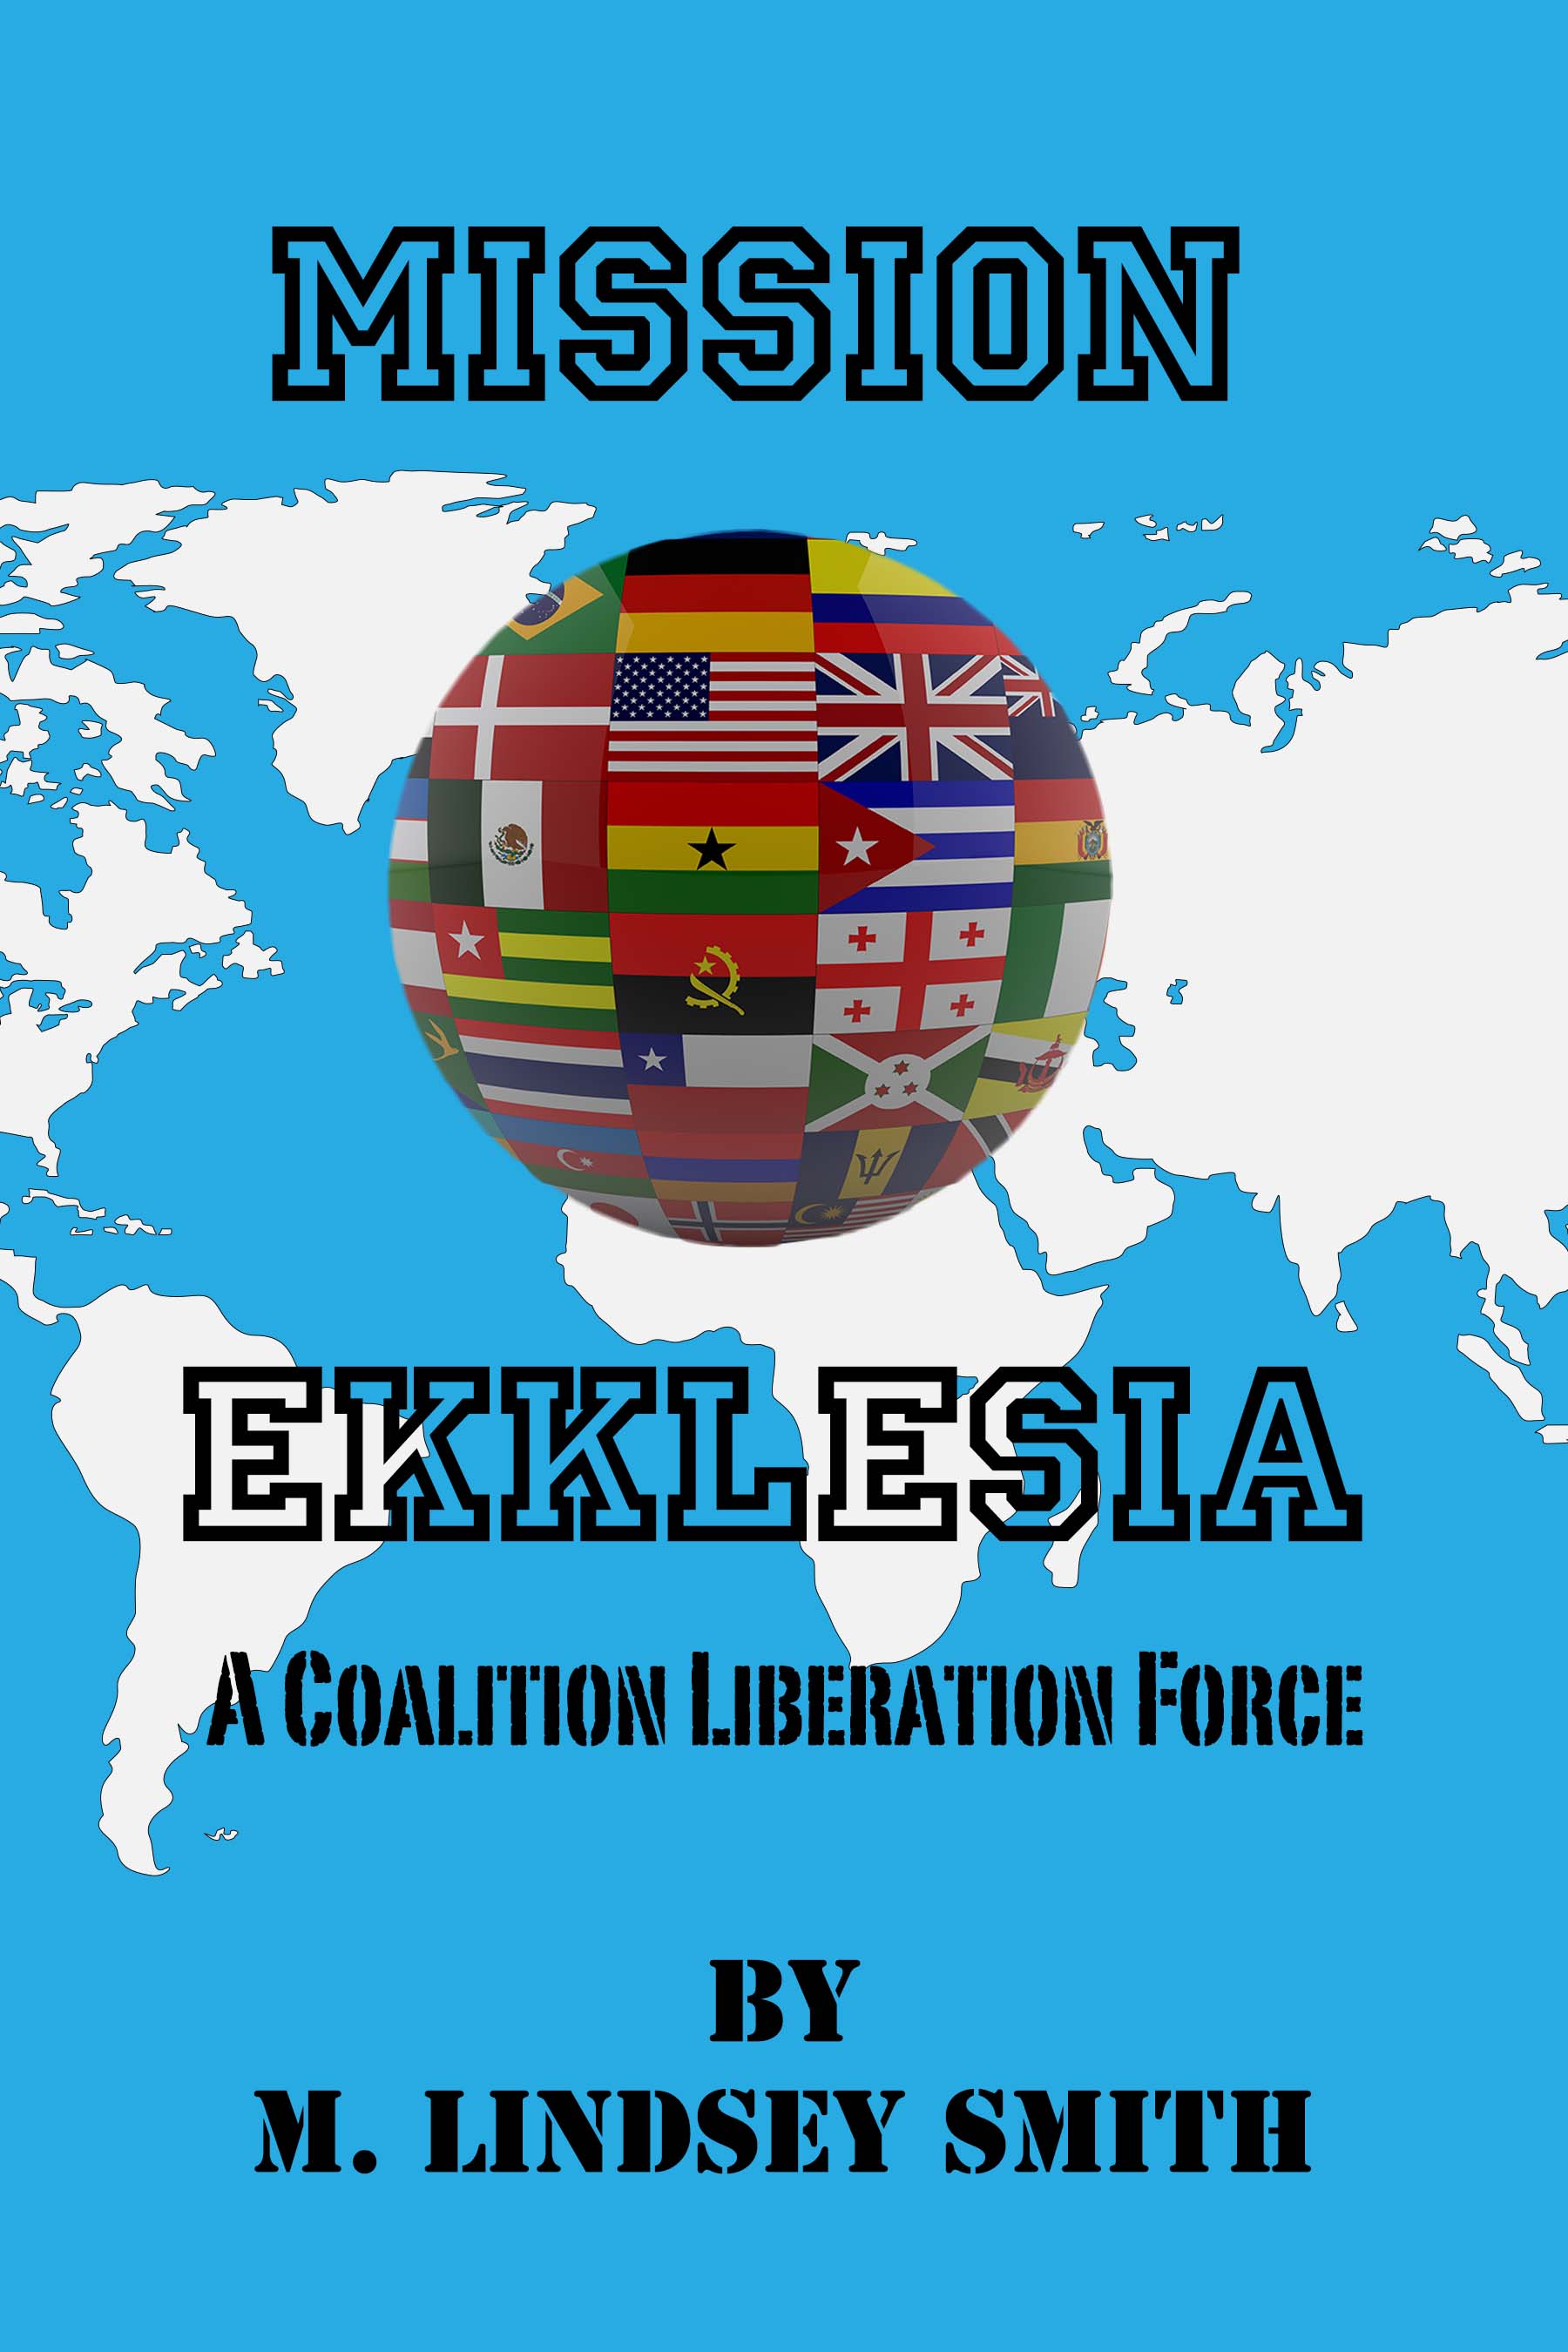 Mission Ekklesia A Coalition Liberation Force